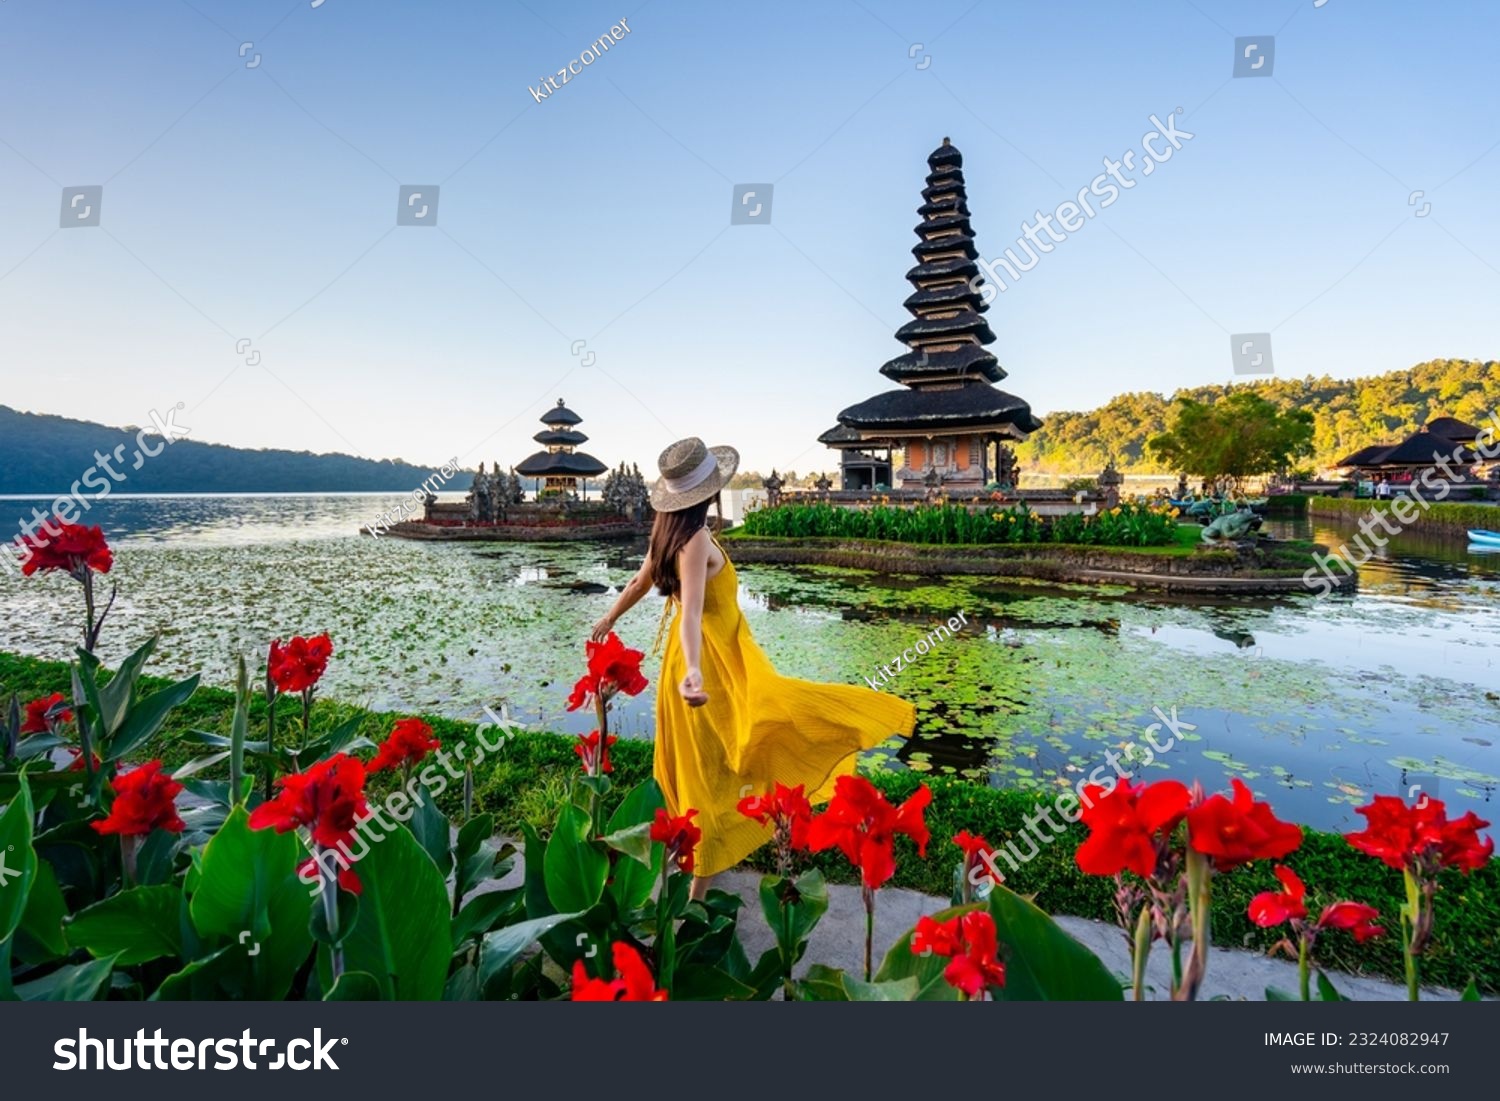 Young woman tourist relaxing and enjoying the beautiful view at Ulun Danu Beratan temple in Bali, Indonesia #2324082947